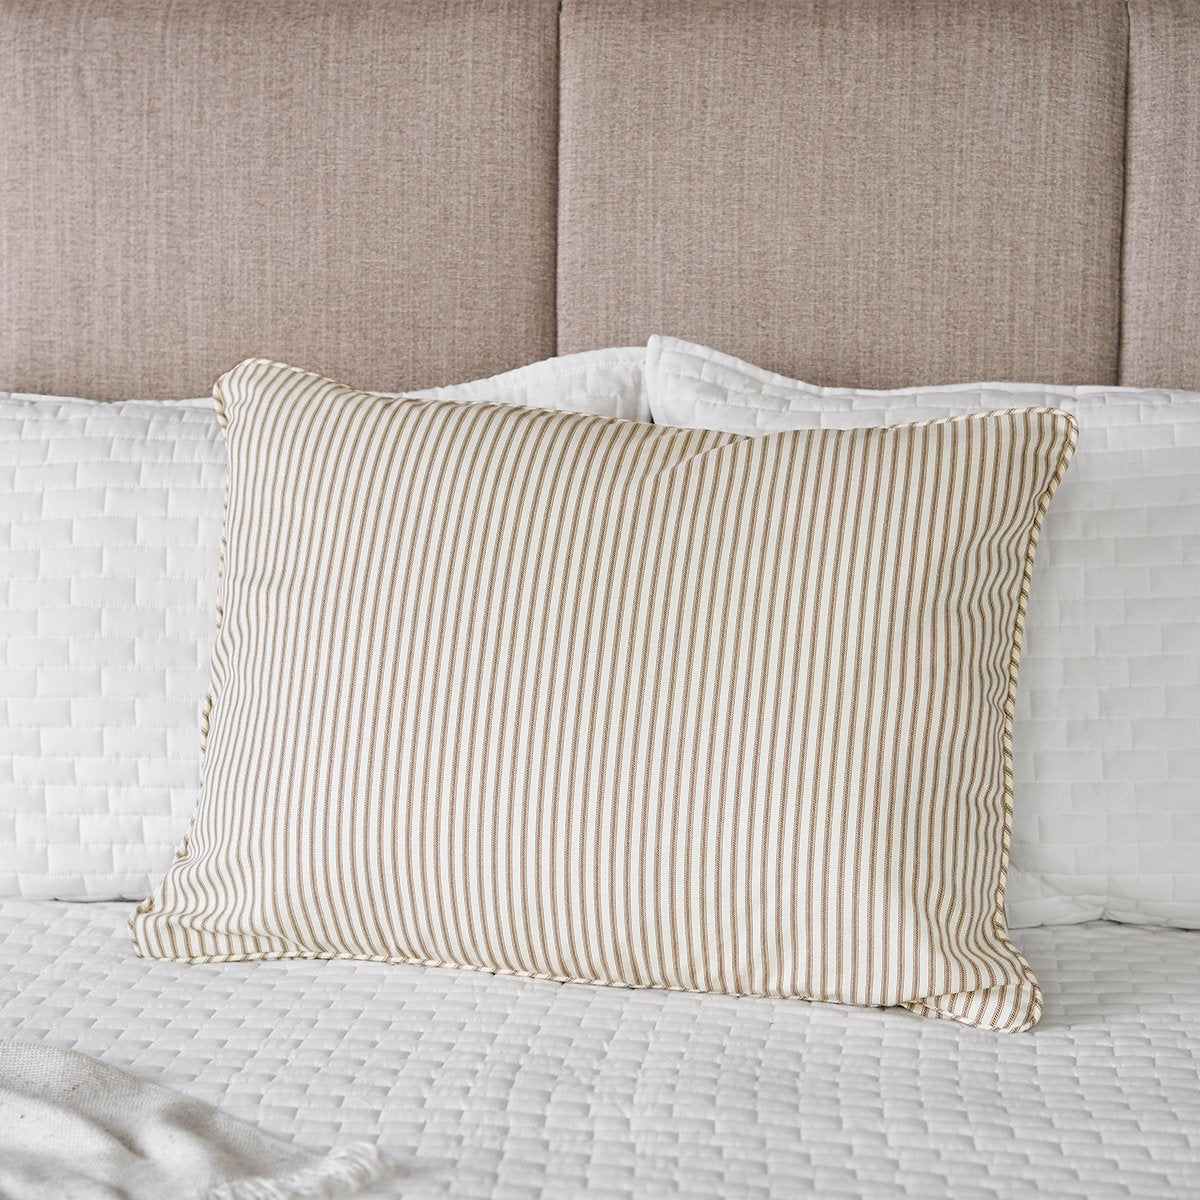 Ticking Stripe Pillow Sham |   Standard Size Brown